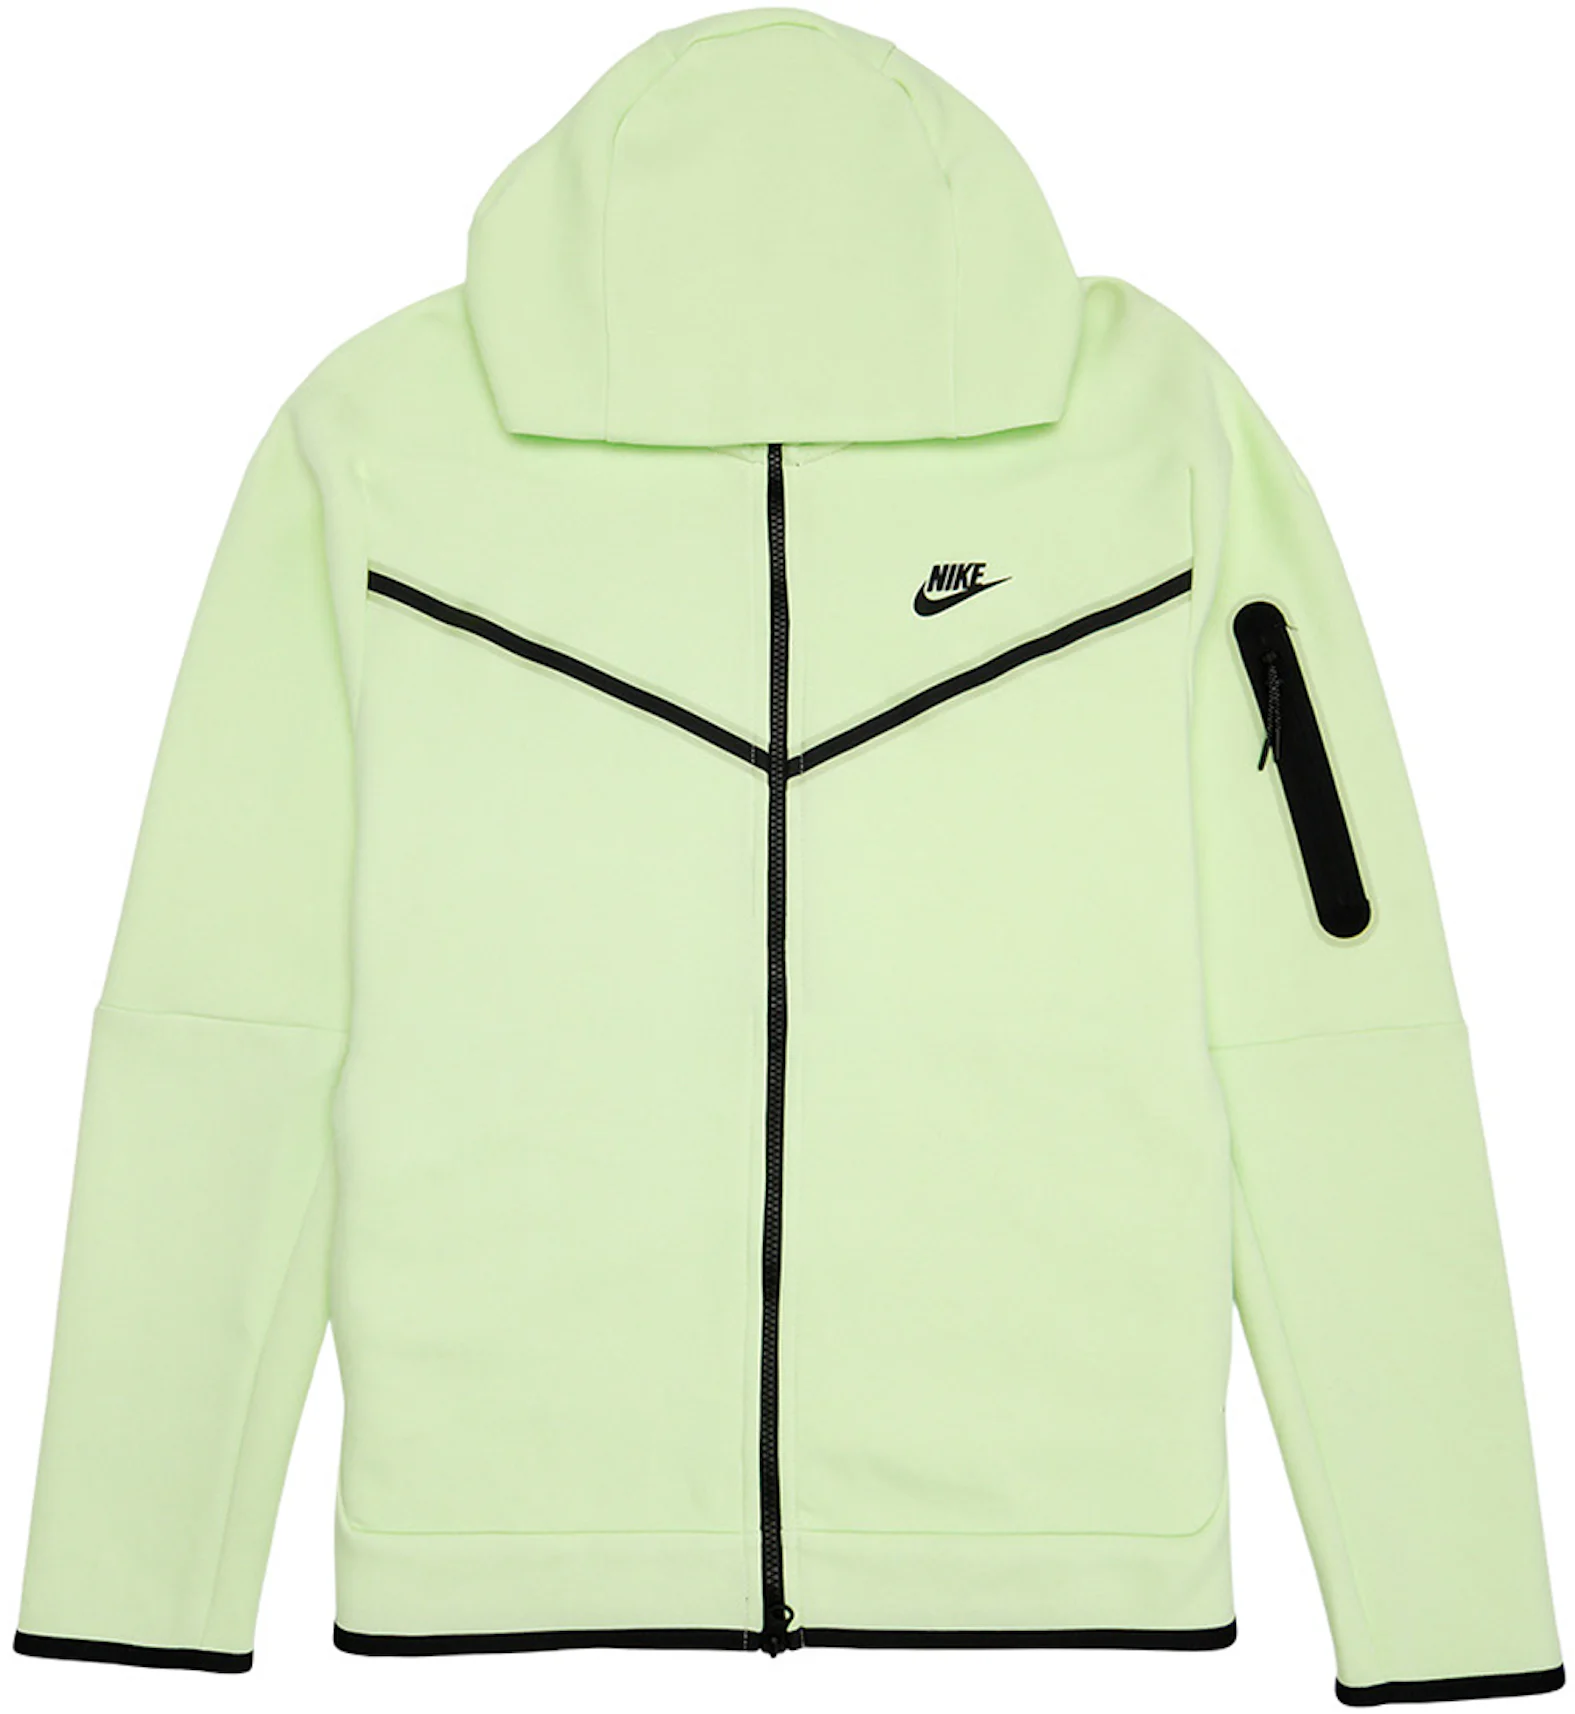 Nike Tech Fleece zip up hoodie in stone and brown